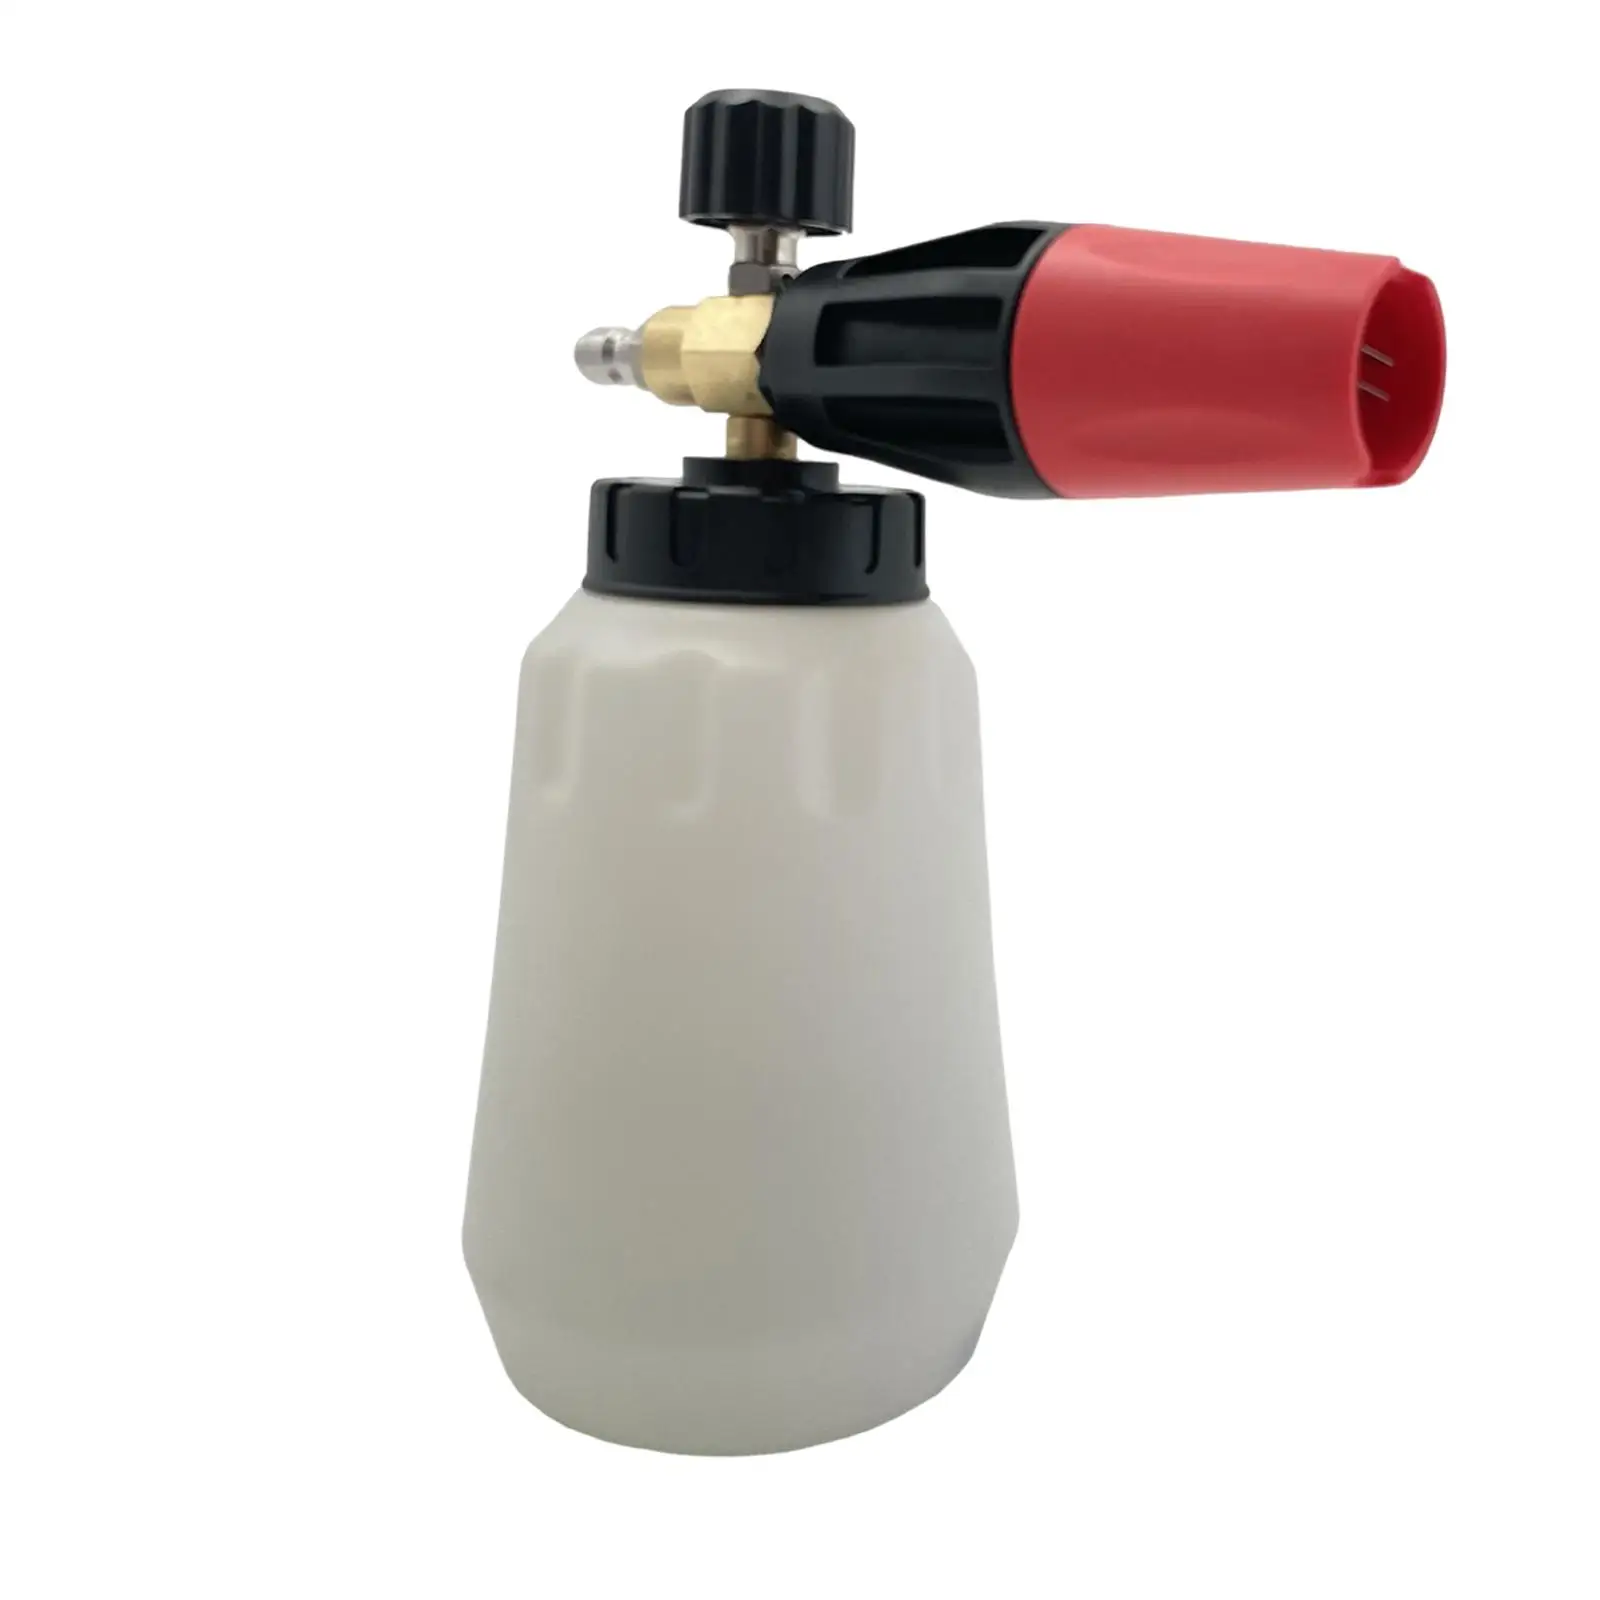 Foam Pressure Bottle, Adjustable  Nozzle Pressure Washer Foam  for Car Washing, House Floor Window Cleaning, 1/4